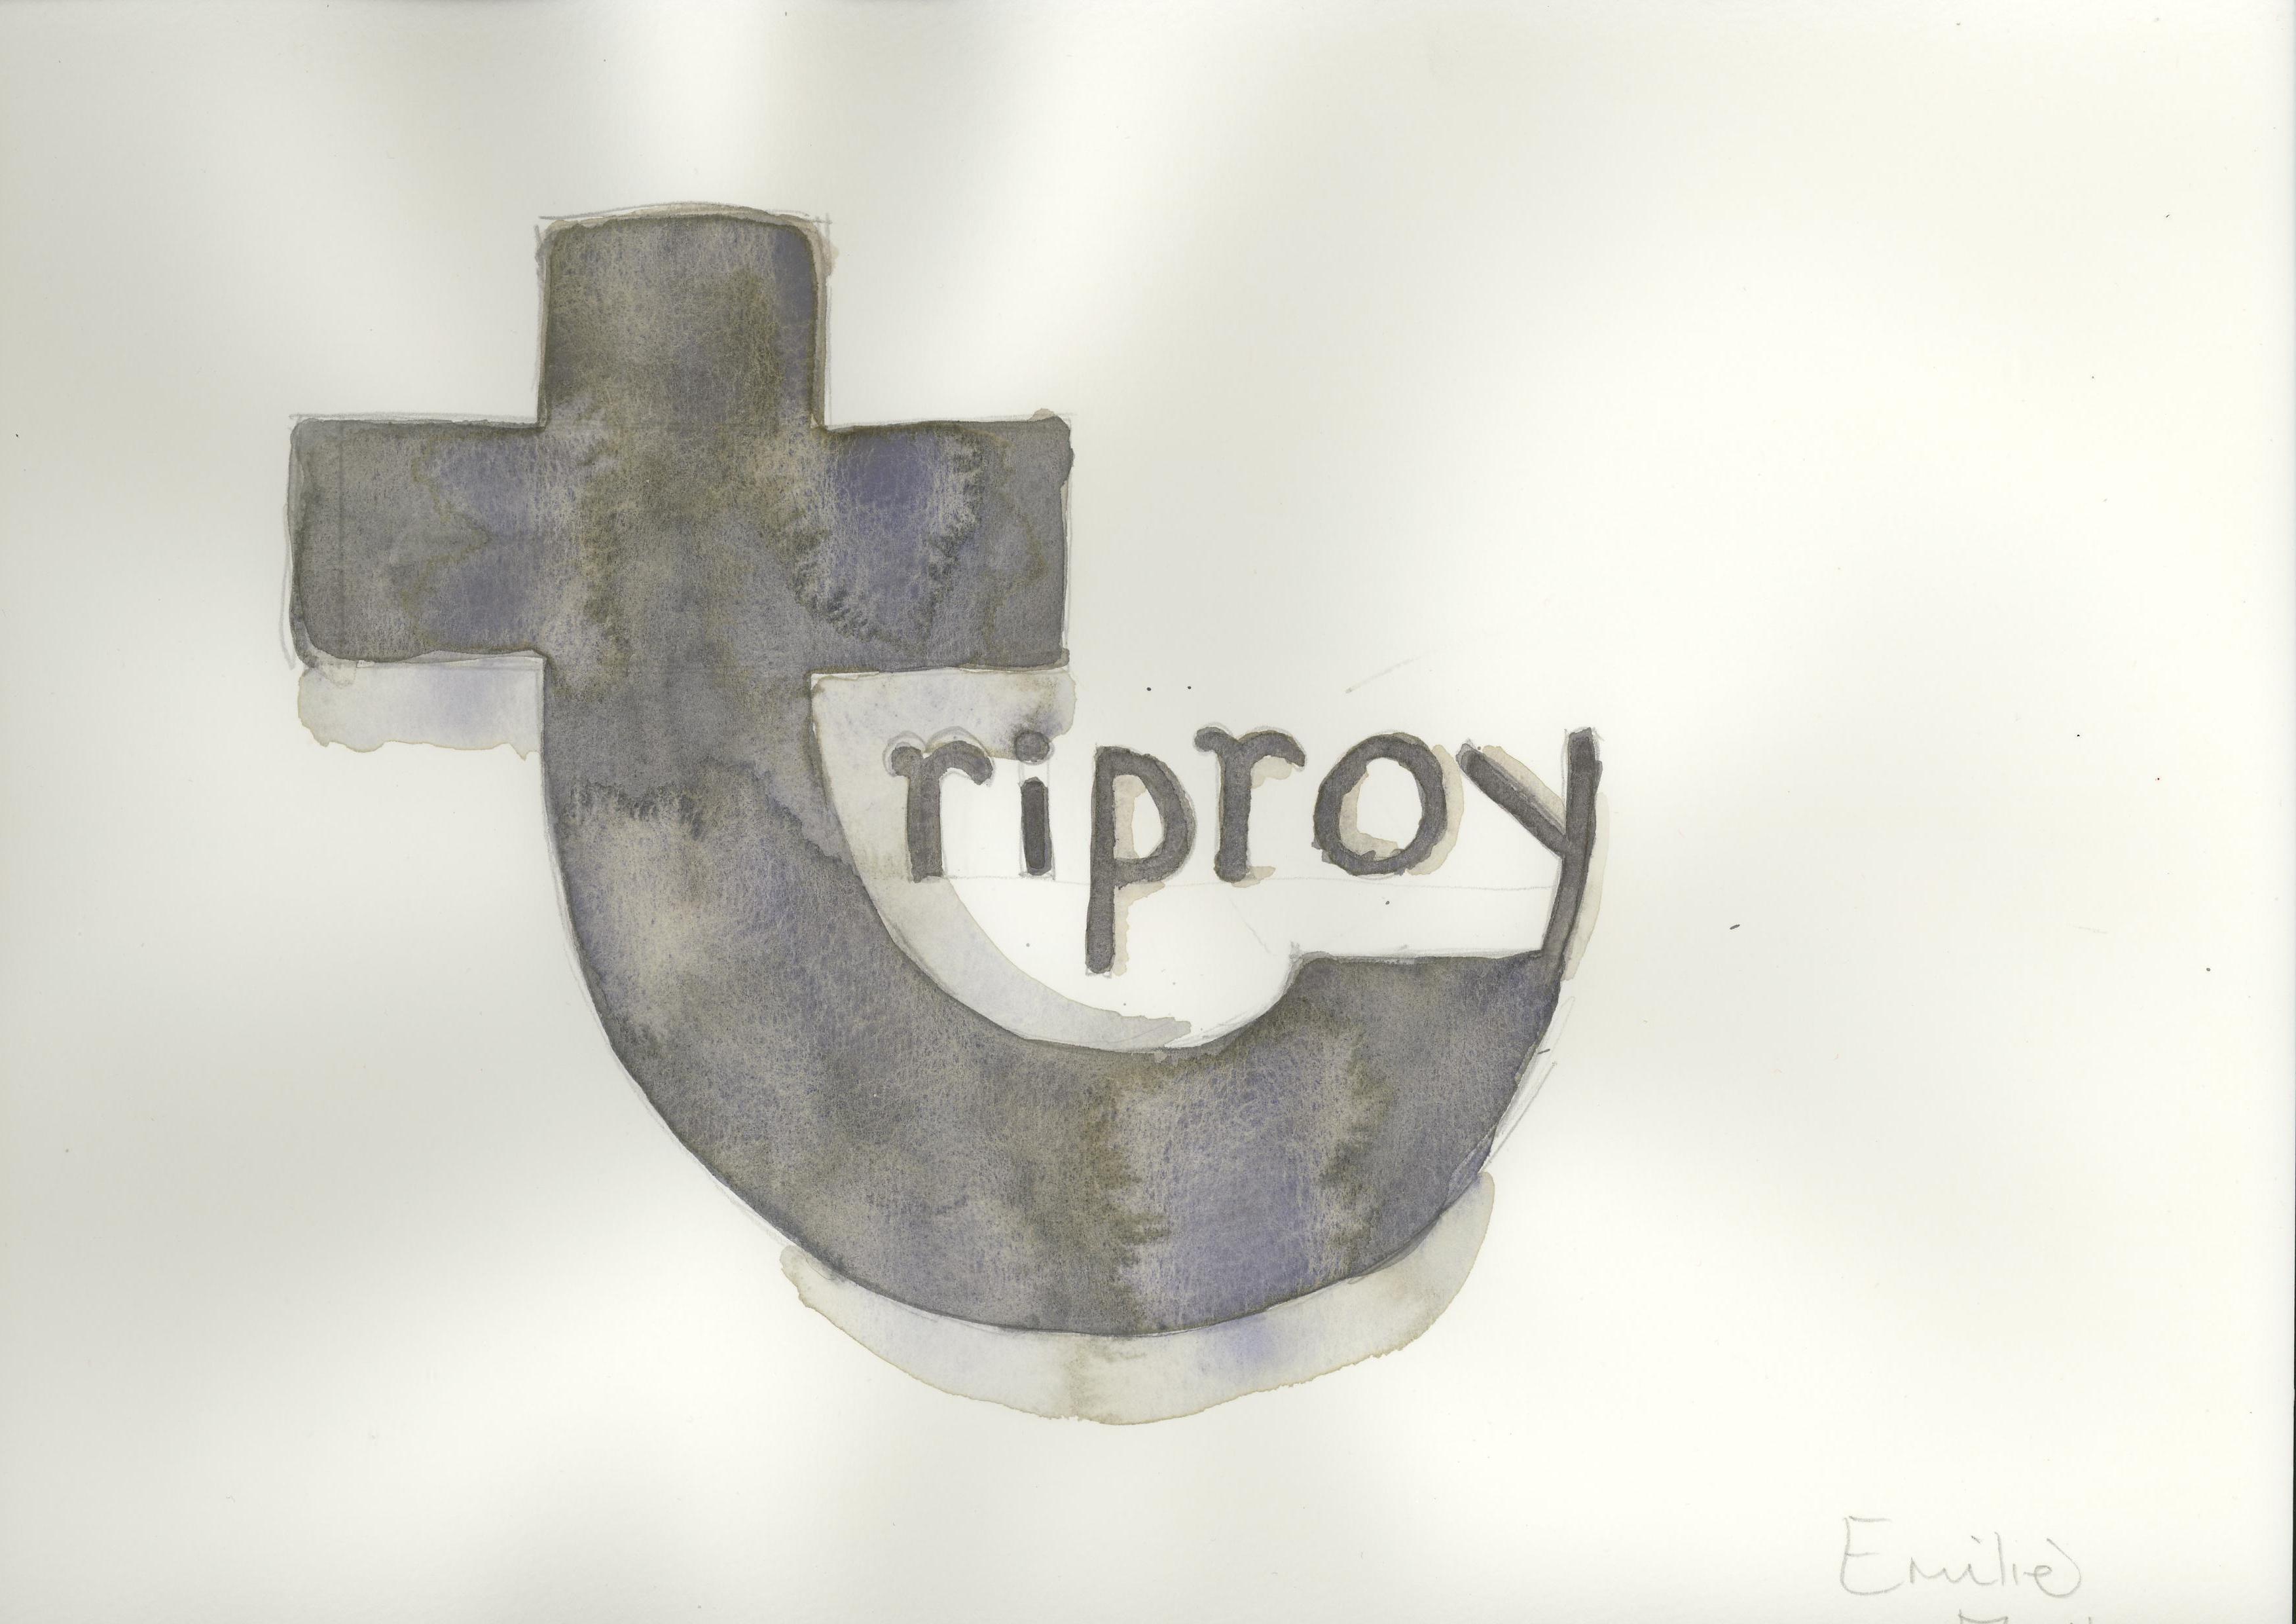 Triproy